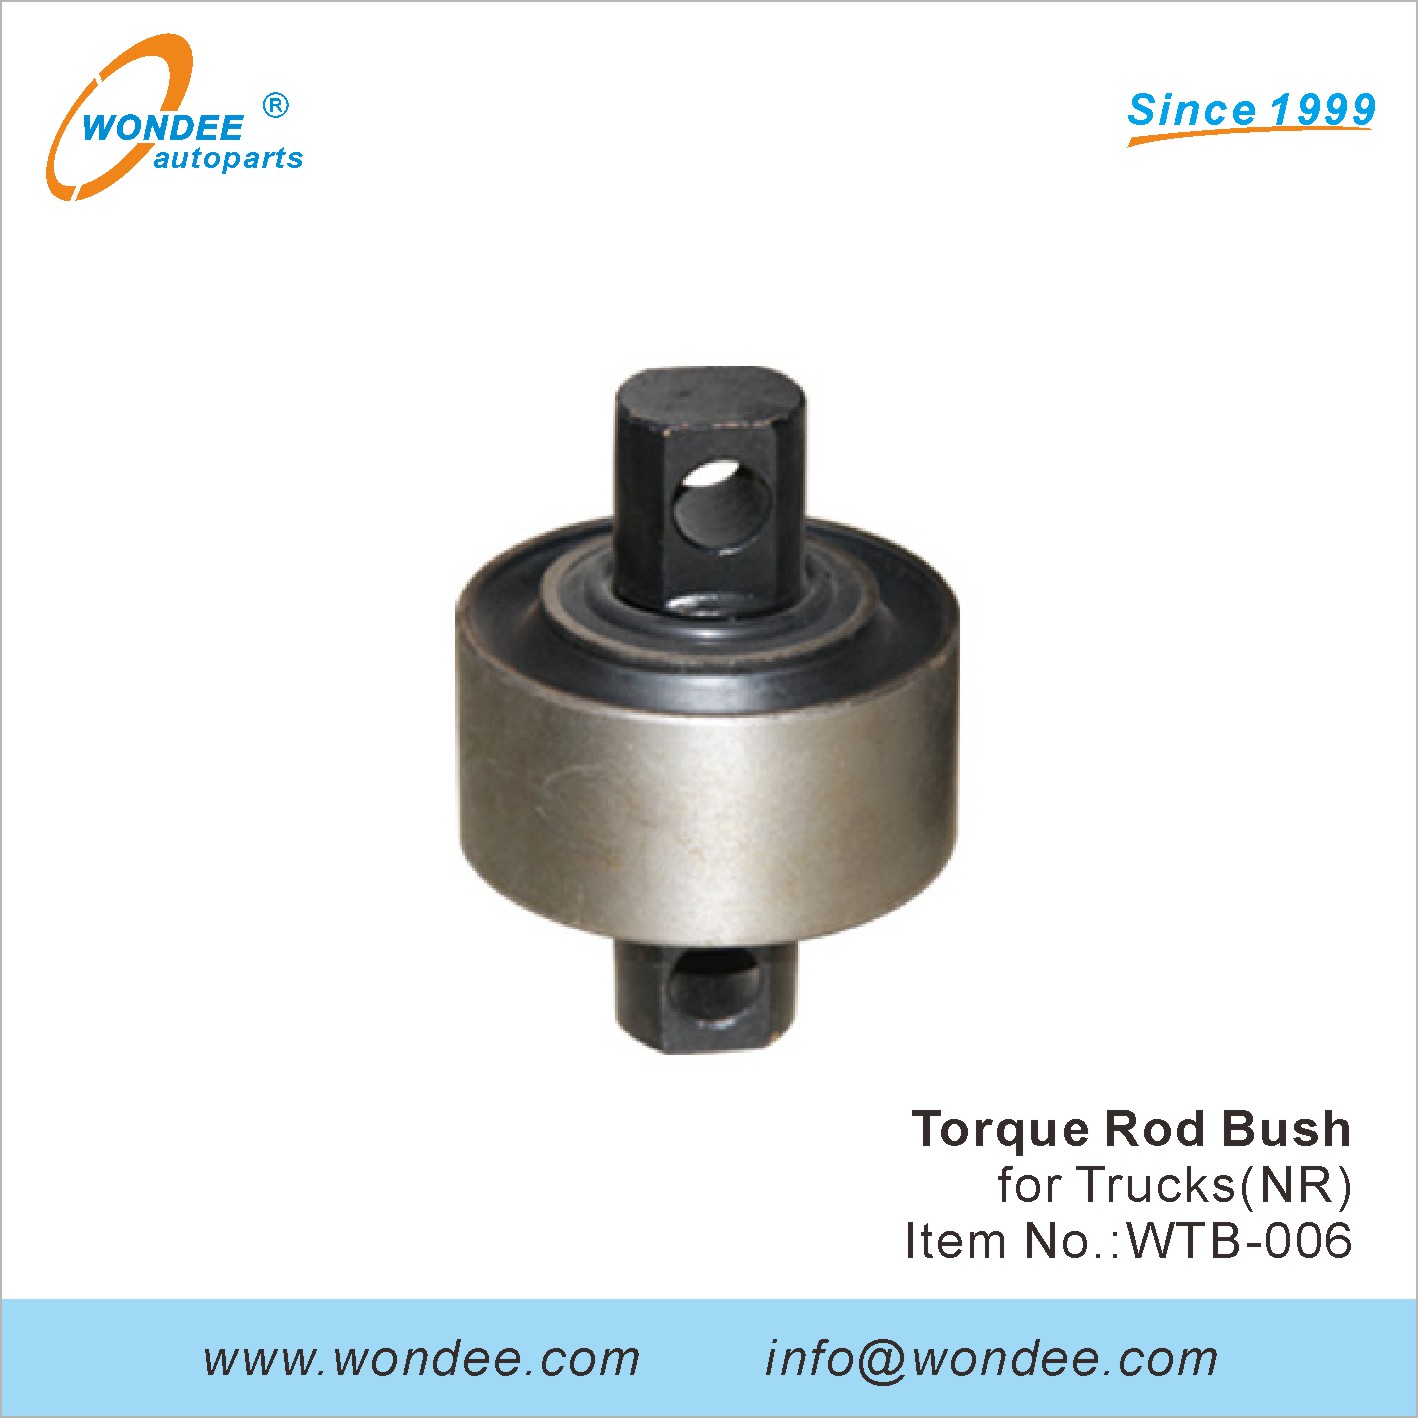 WONDEE torque rod bush (6)